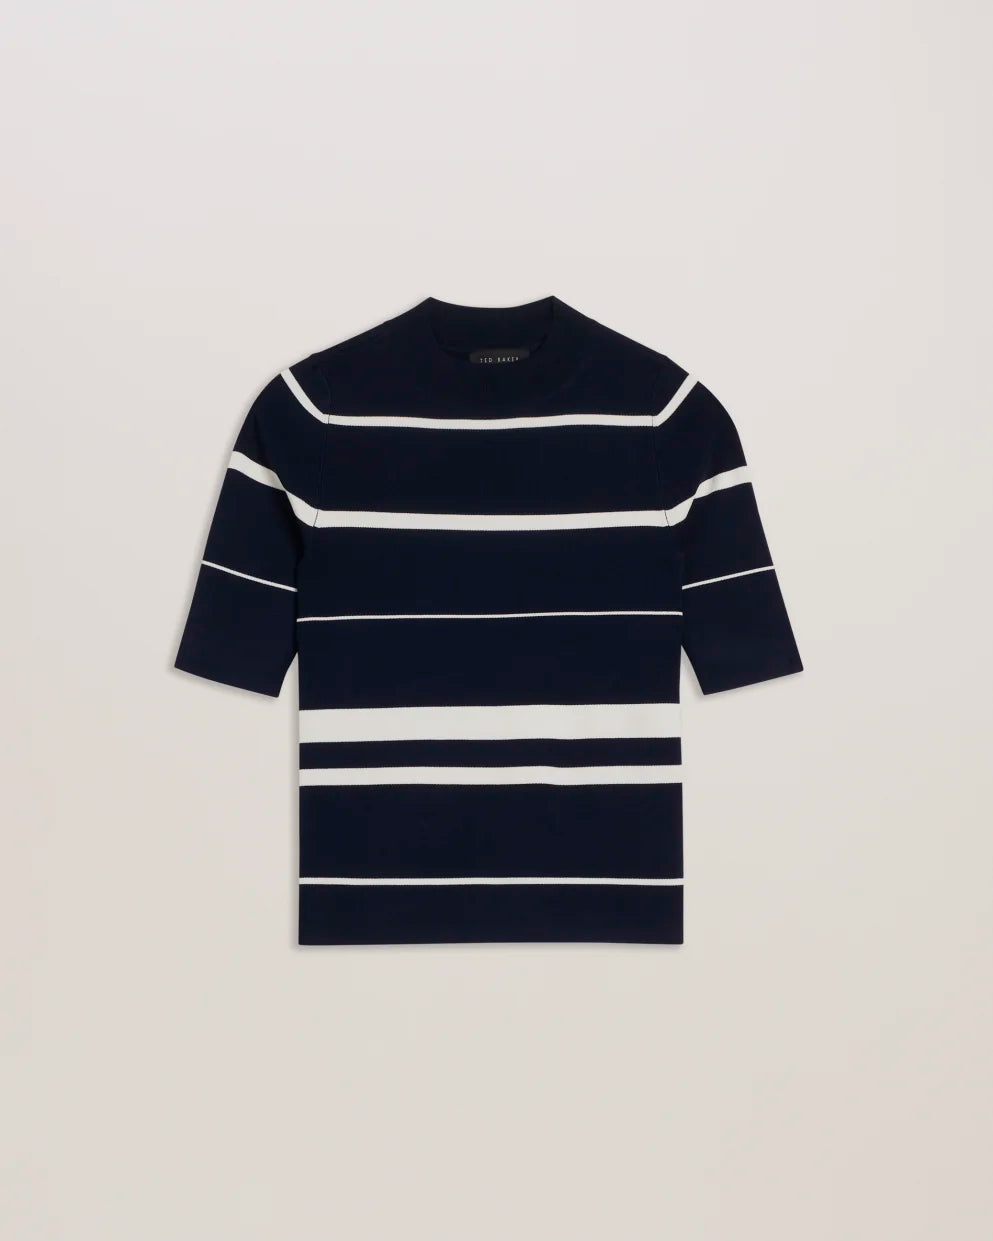 MAKARIN - Stripe Knitted Navy Top